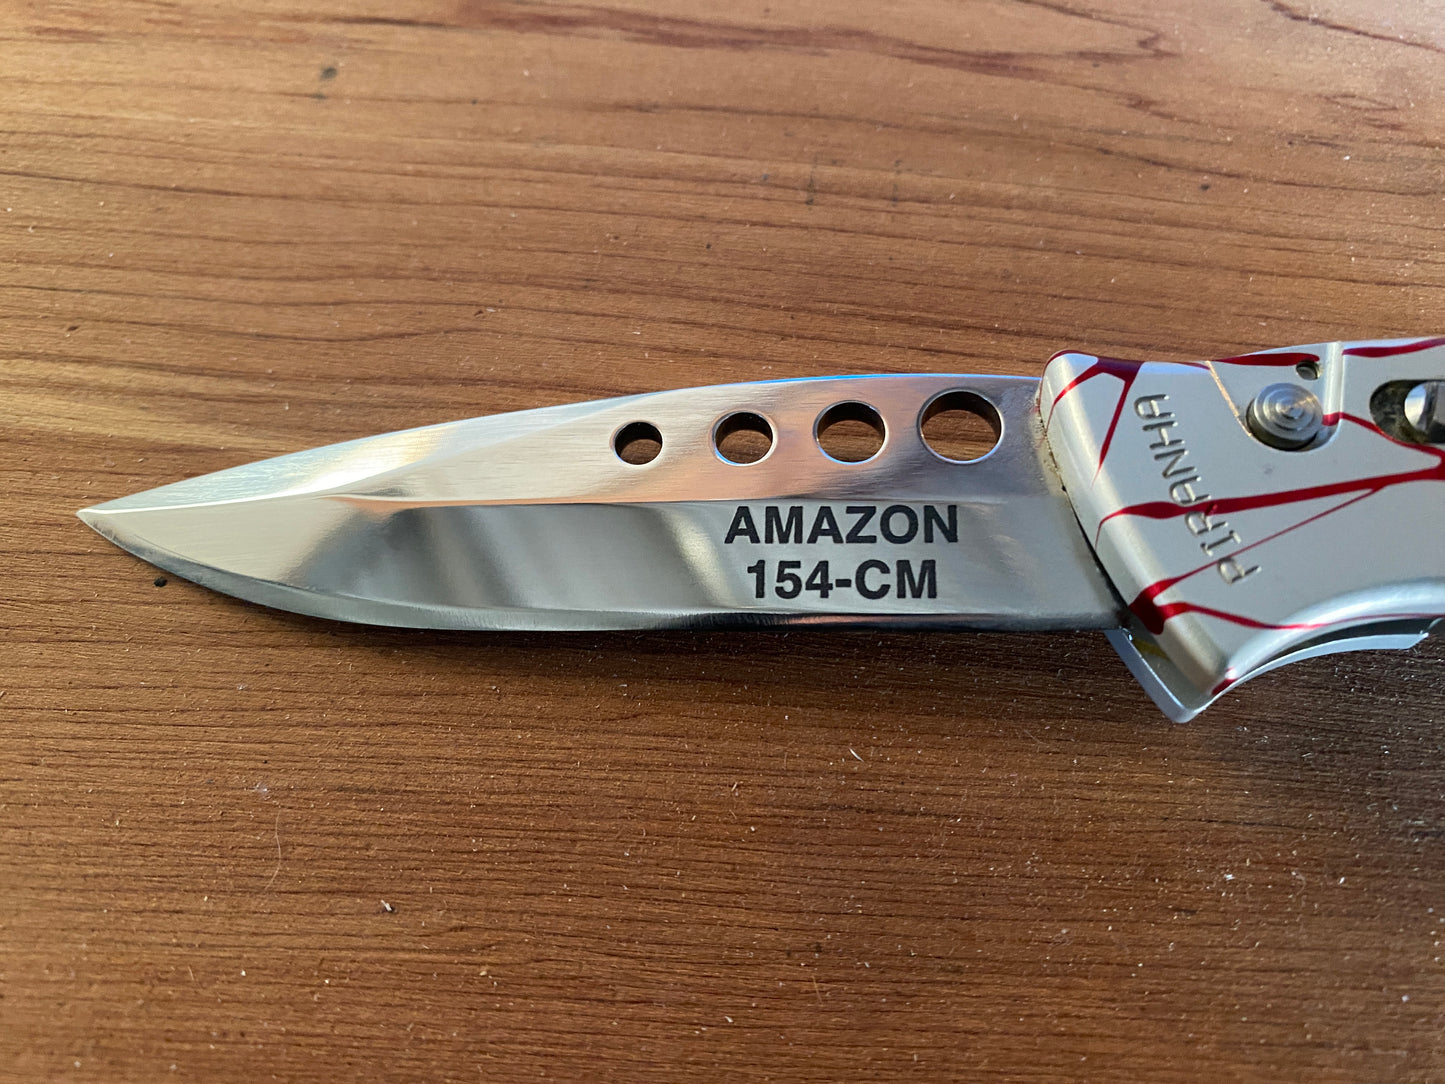 Piranha Amazon  Automatic pocket knife